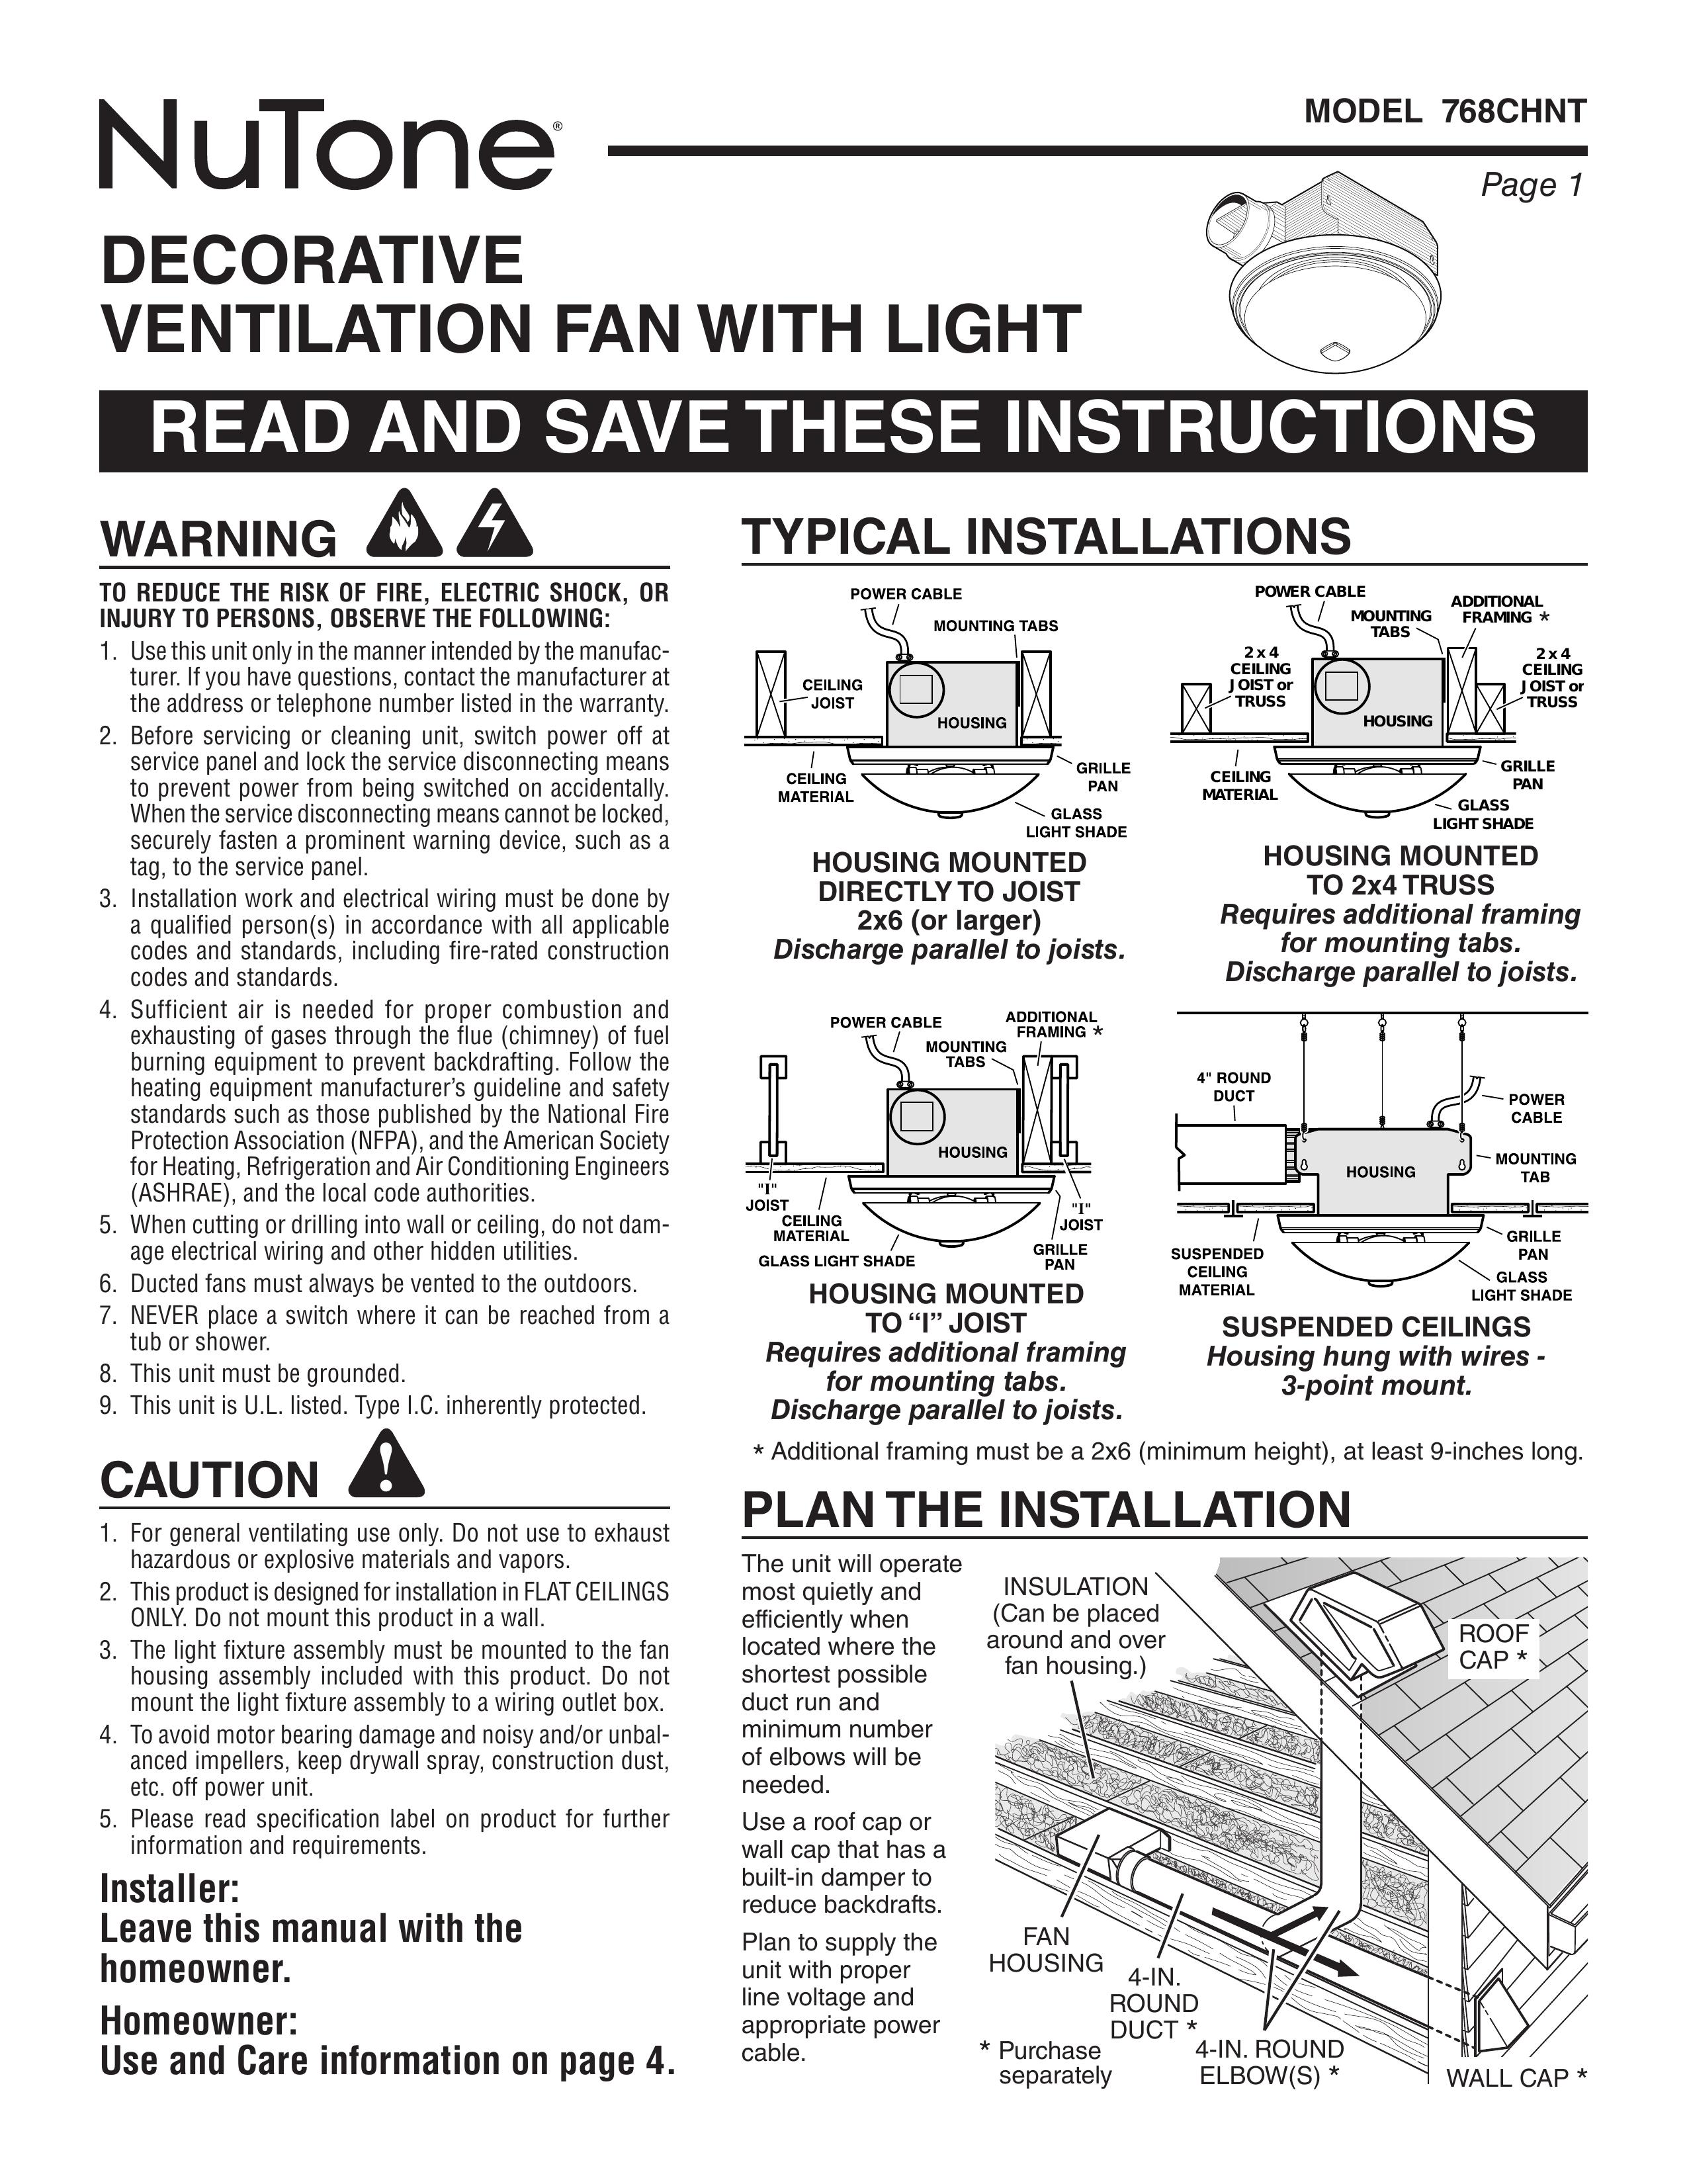 NuTone 768CHNT Ventilation Hood User Manual